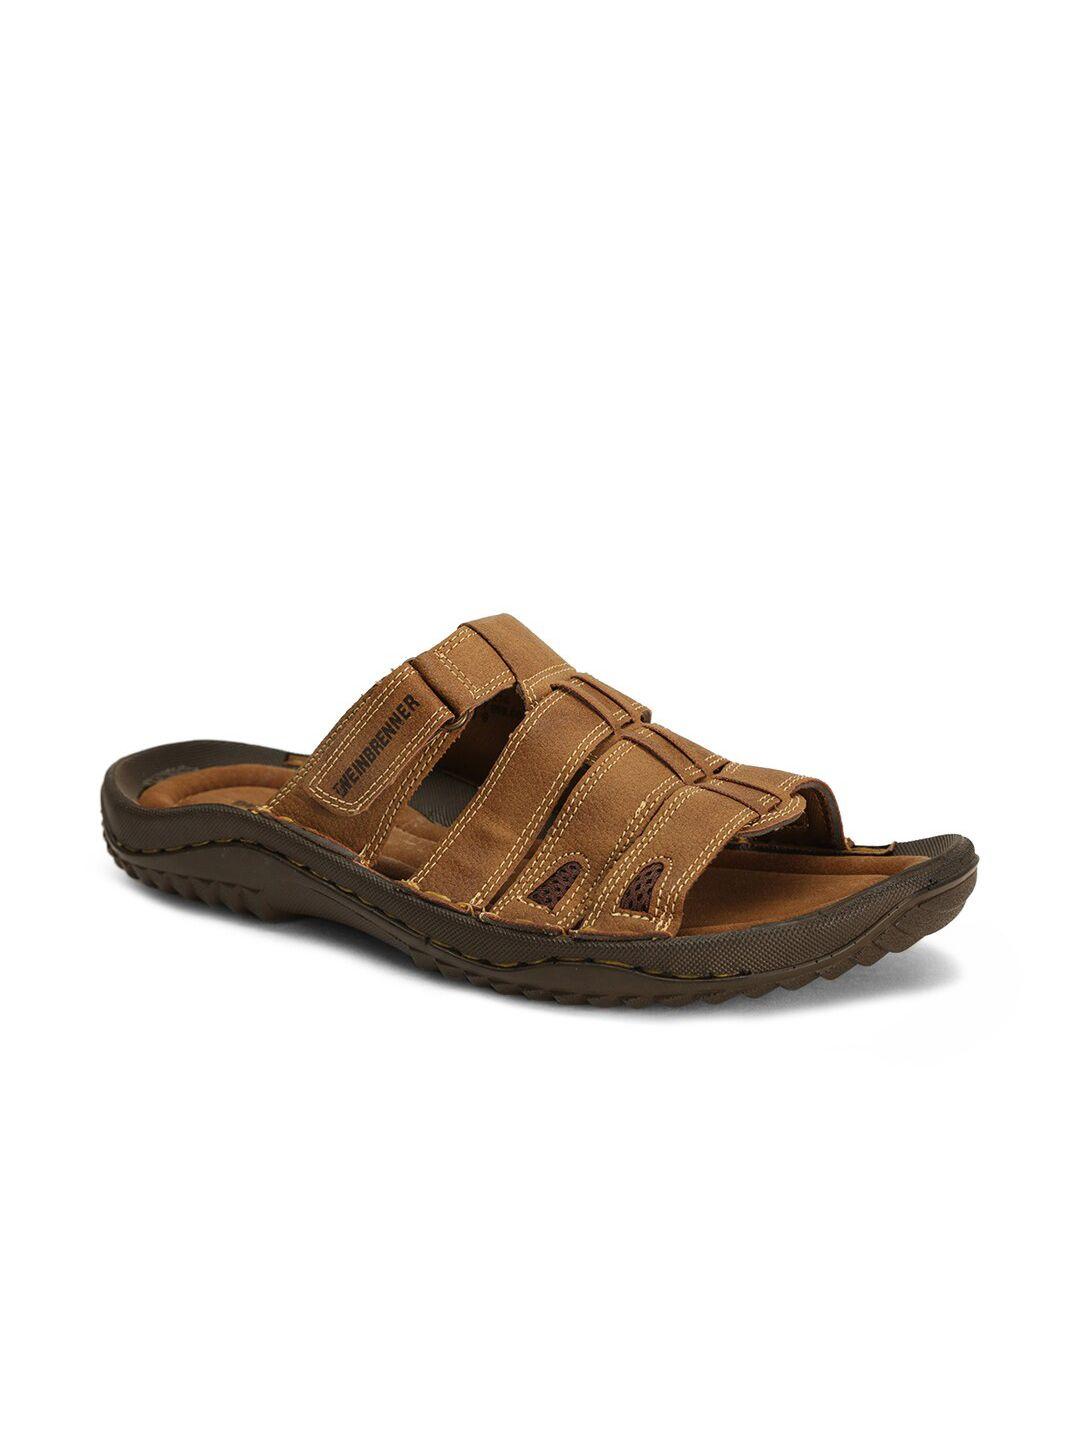 weinbrenner men tan comfort sandals